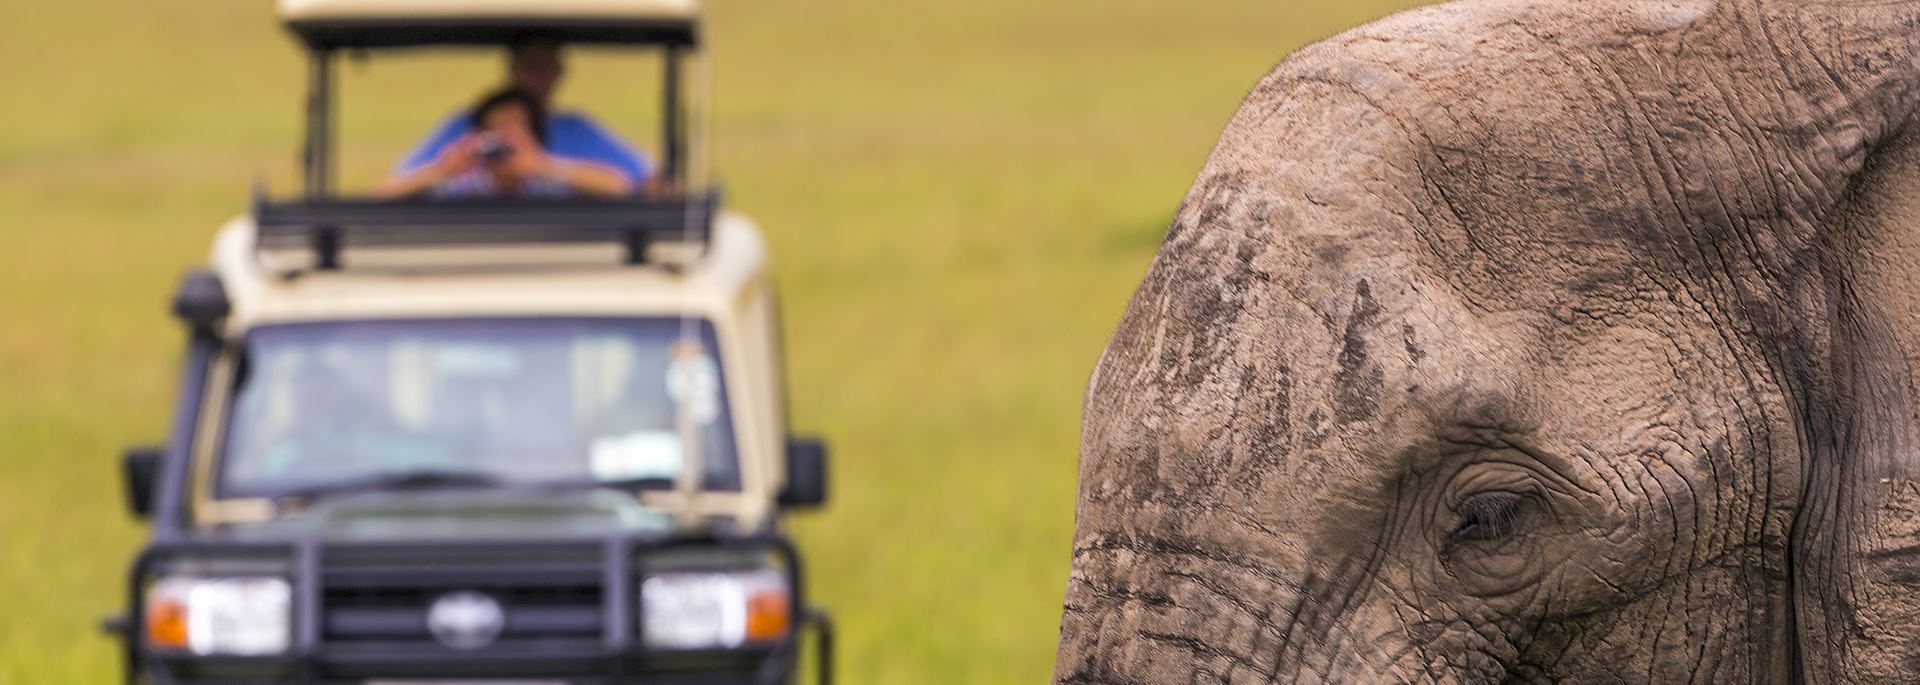 Getting close the elephant, Kenya